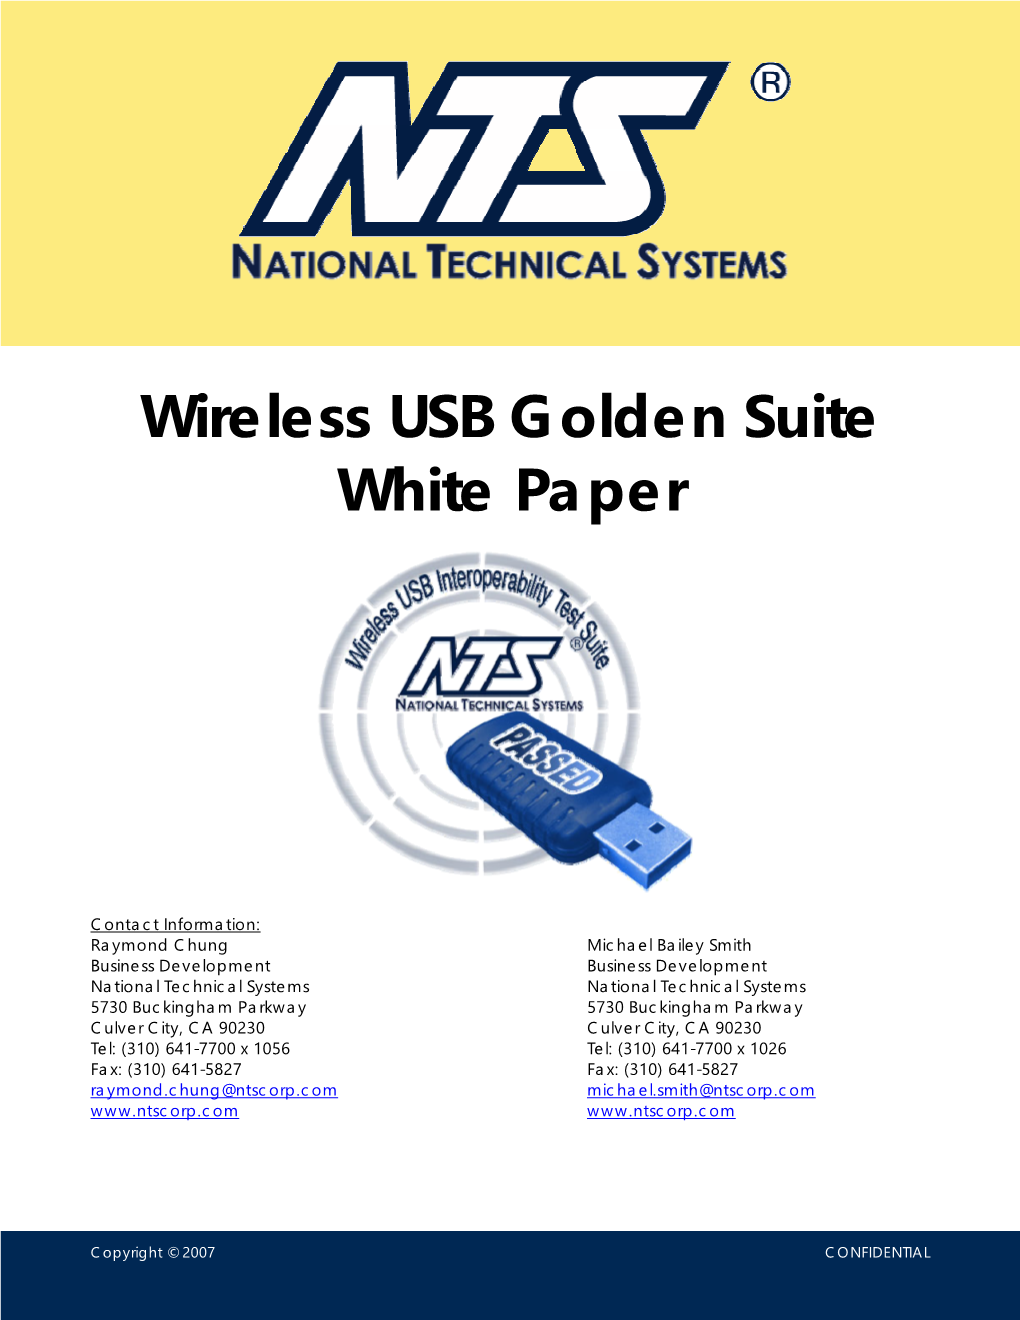 Wireless USB Golden Suite White Paper